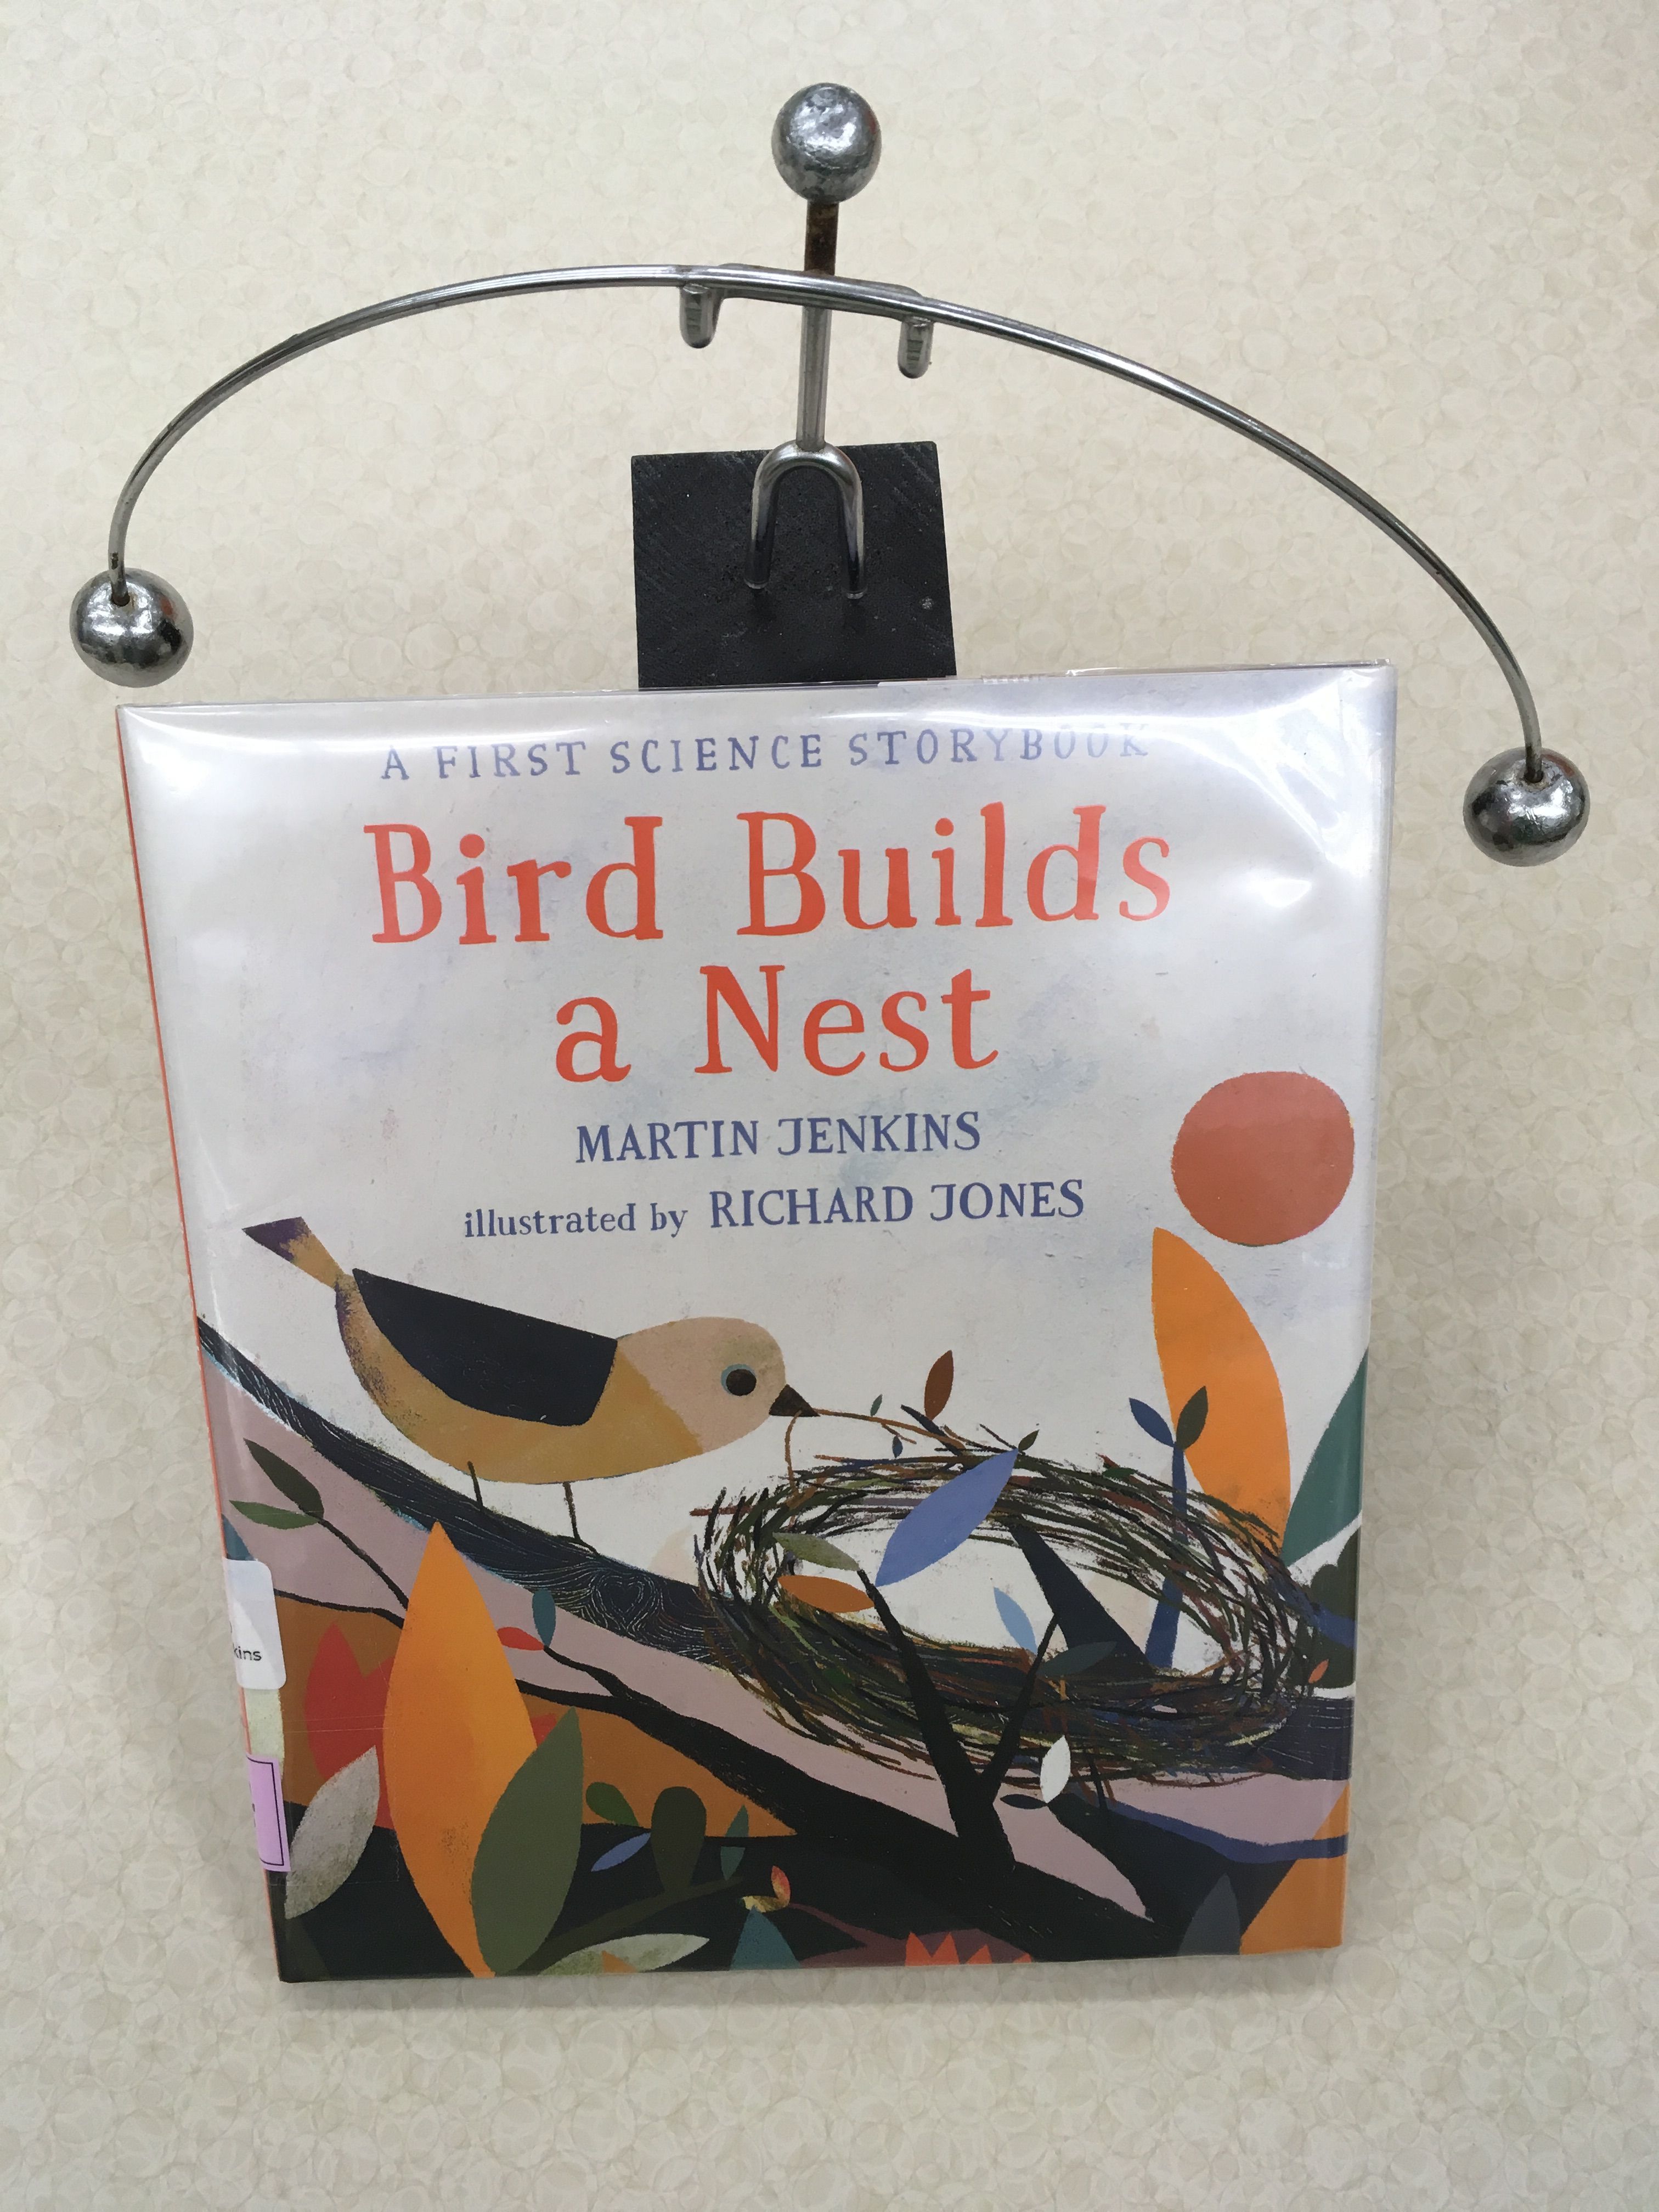 Bird Builds a Nest book, plus gravity swaying acrobat